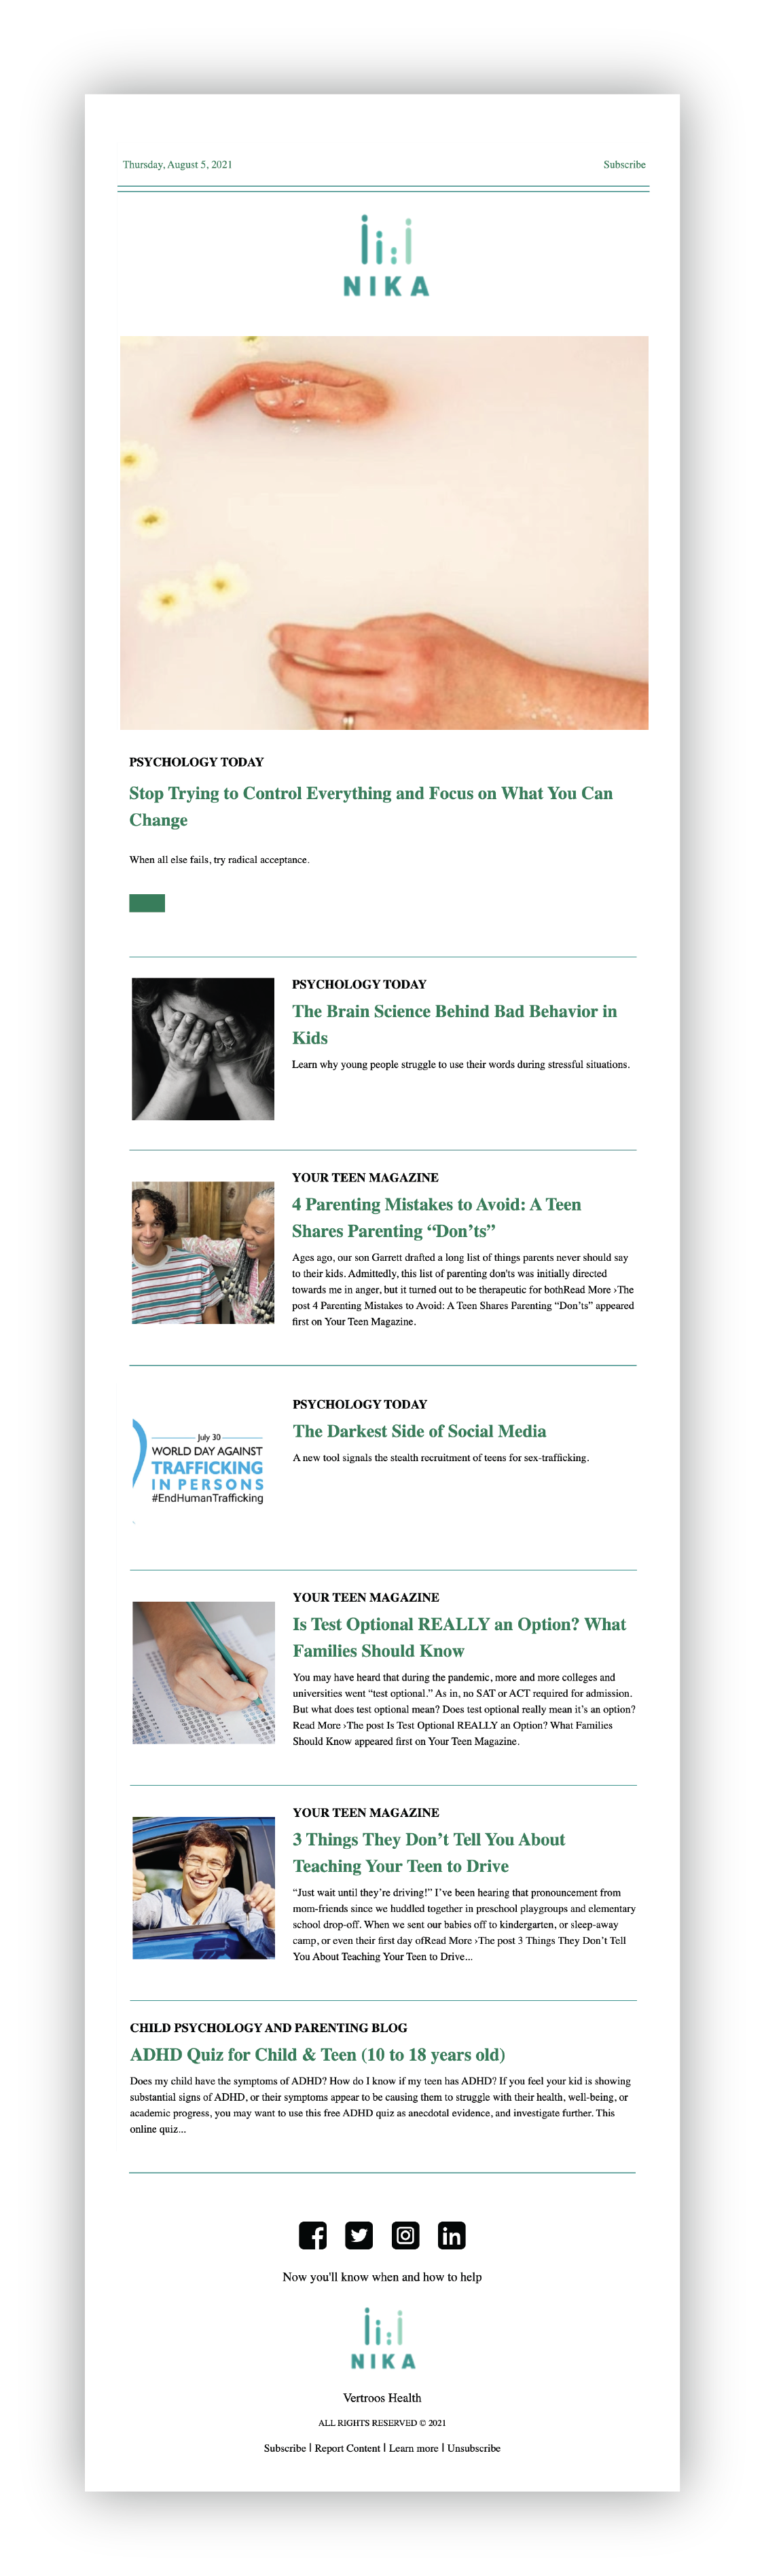 Wellness newsletters - rasa - Nika